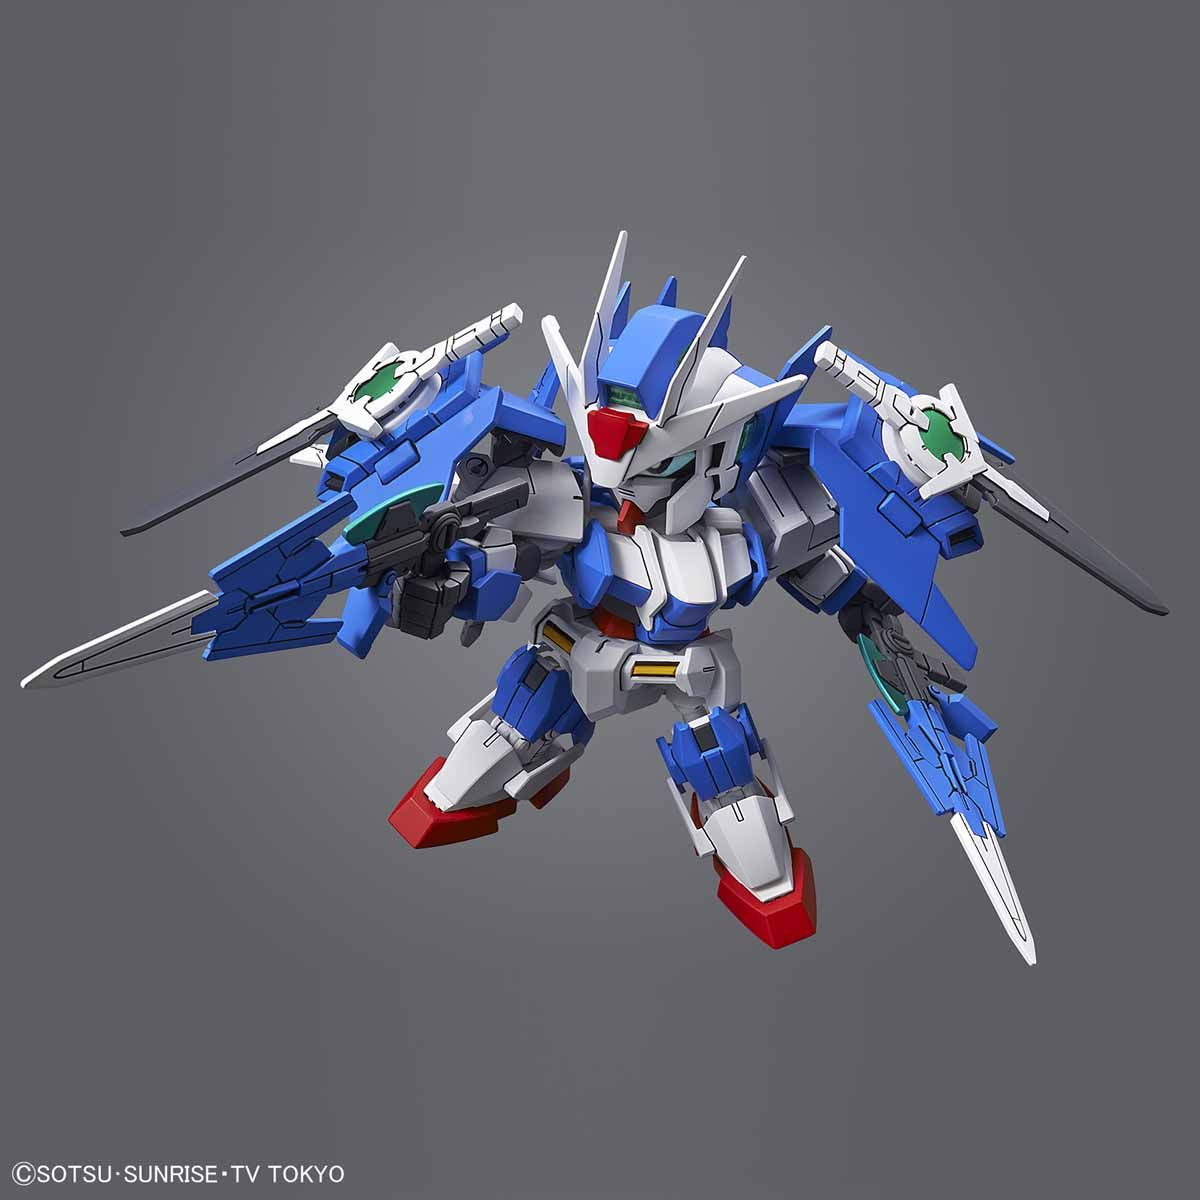 SDCS Gundam 00 Driver Ace - Glacier Hobbies - Bandai